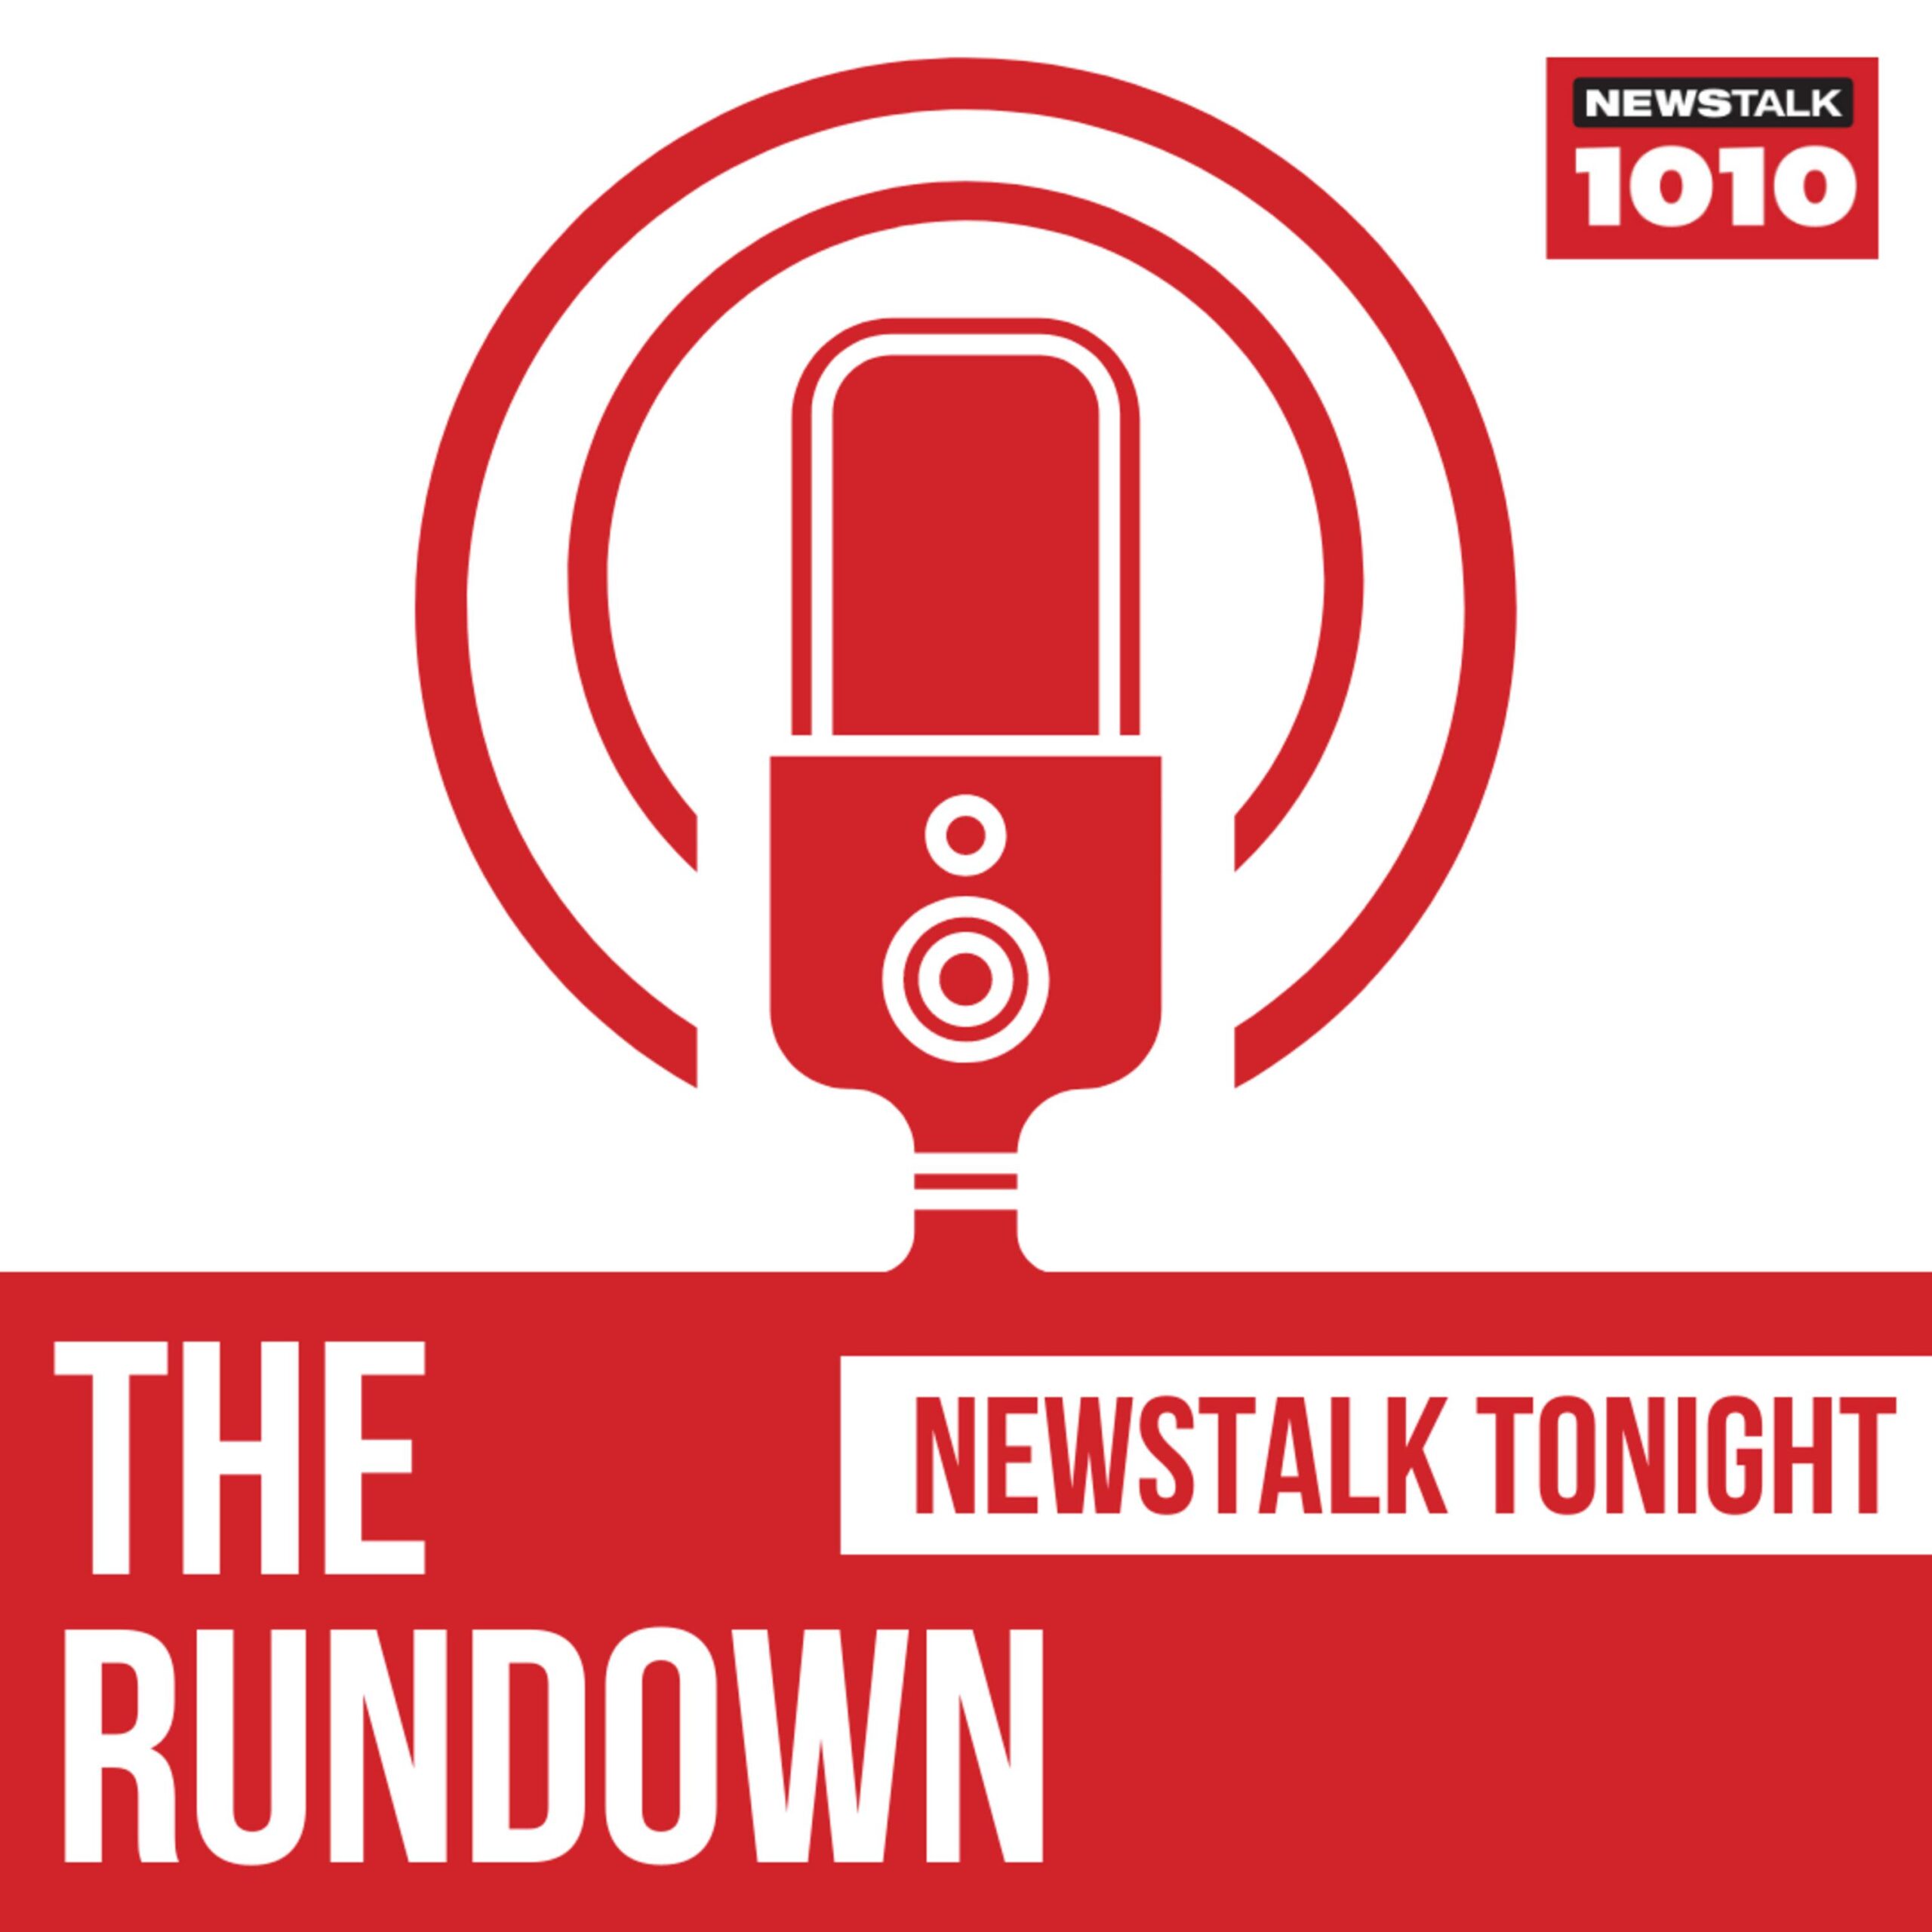 Newstalk 1010 – The Rundown with Jon Liedtke and Caryma S’ad